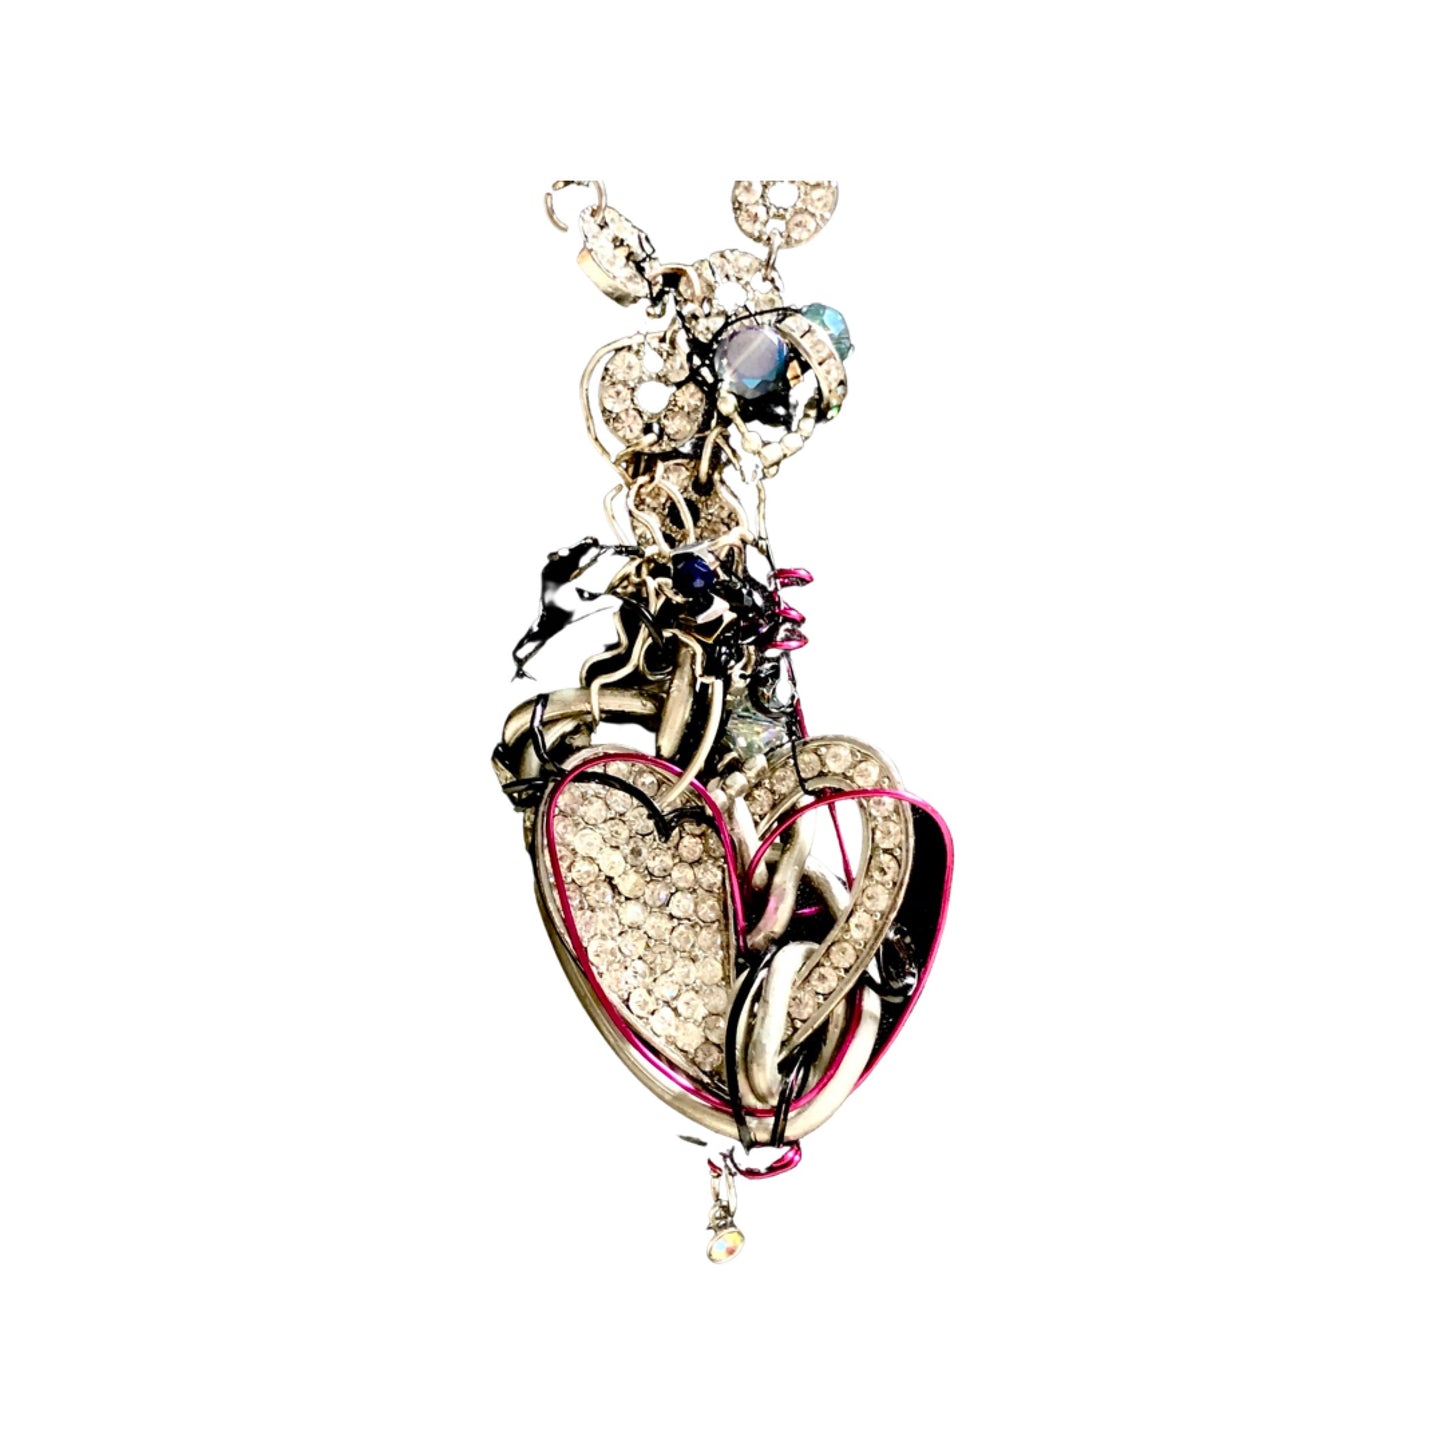 Queen of Hearts necklace